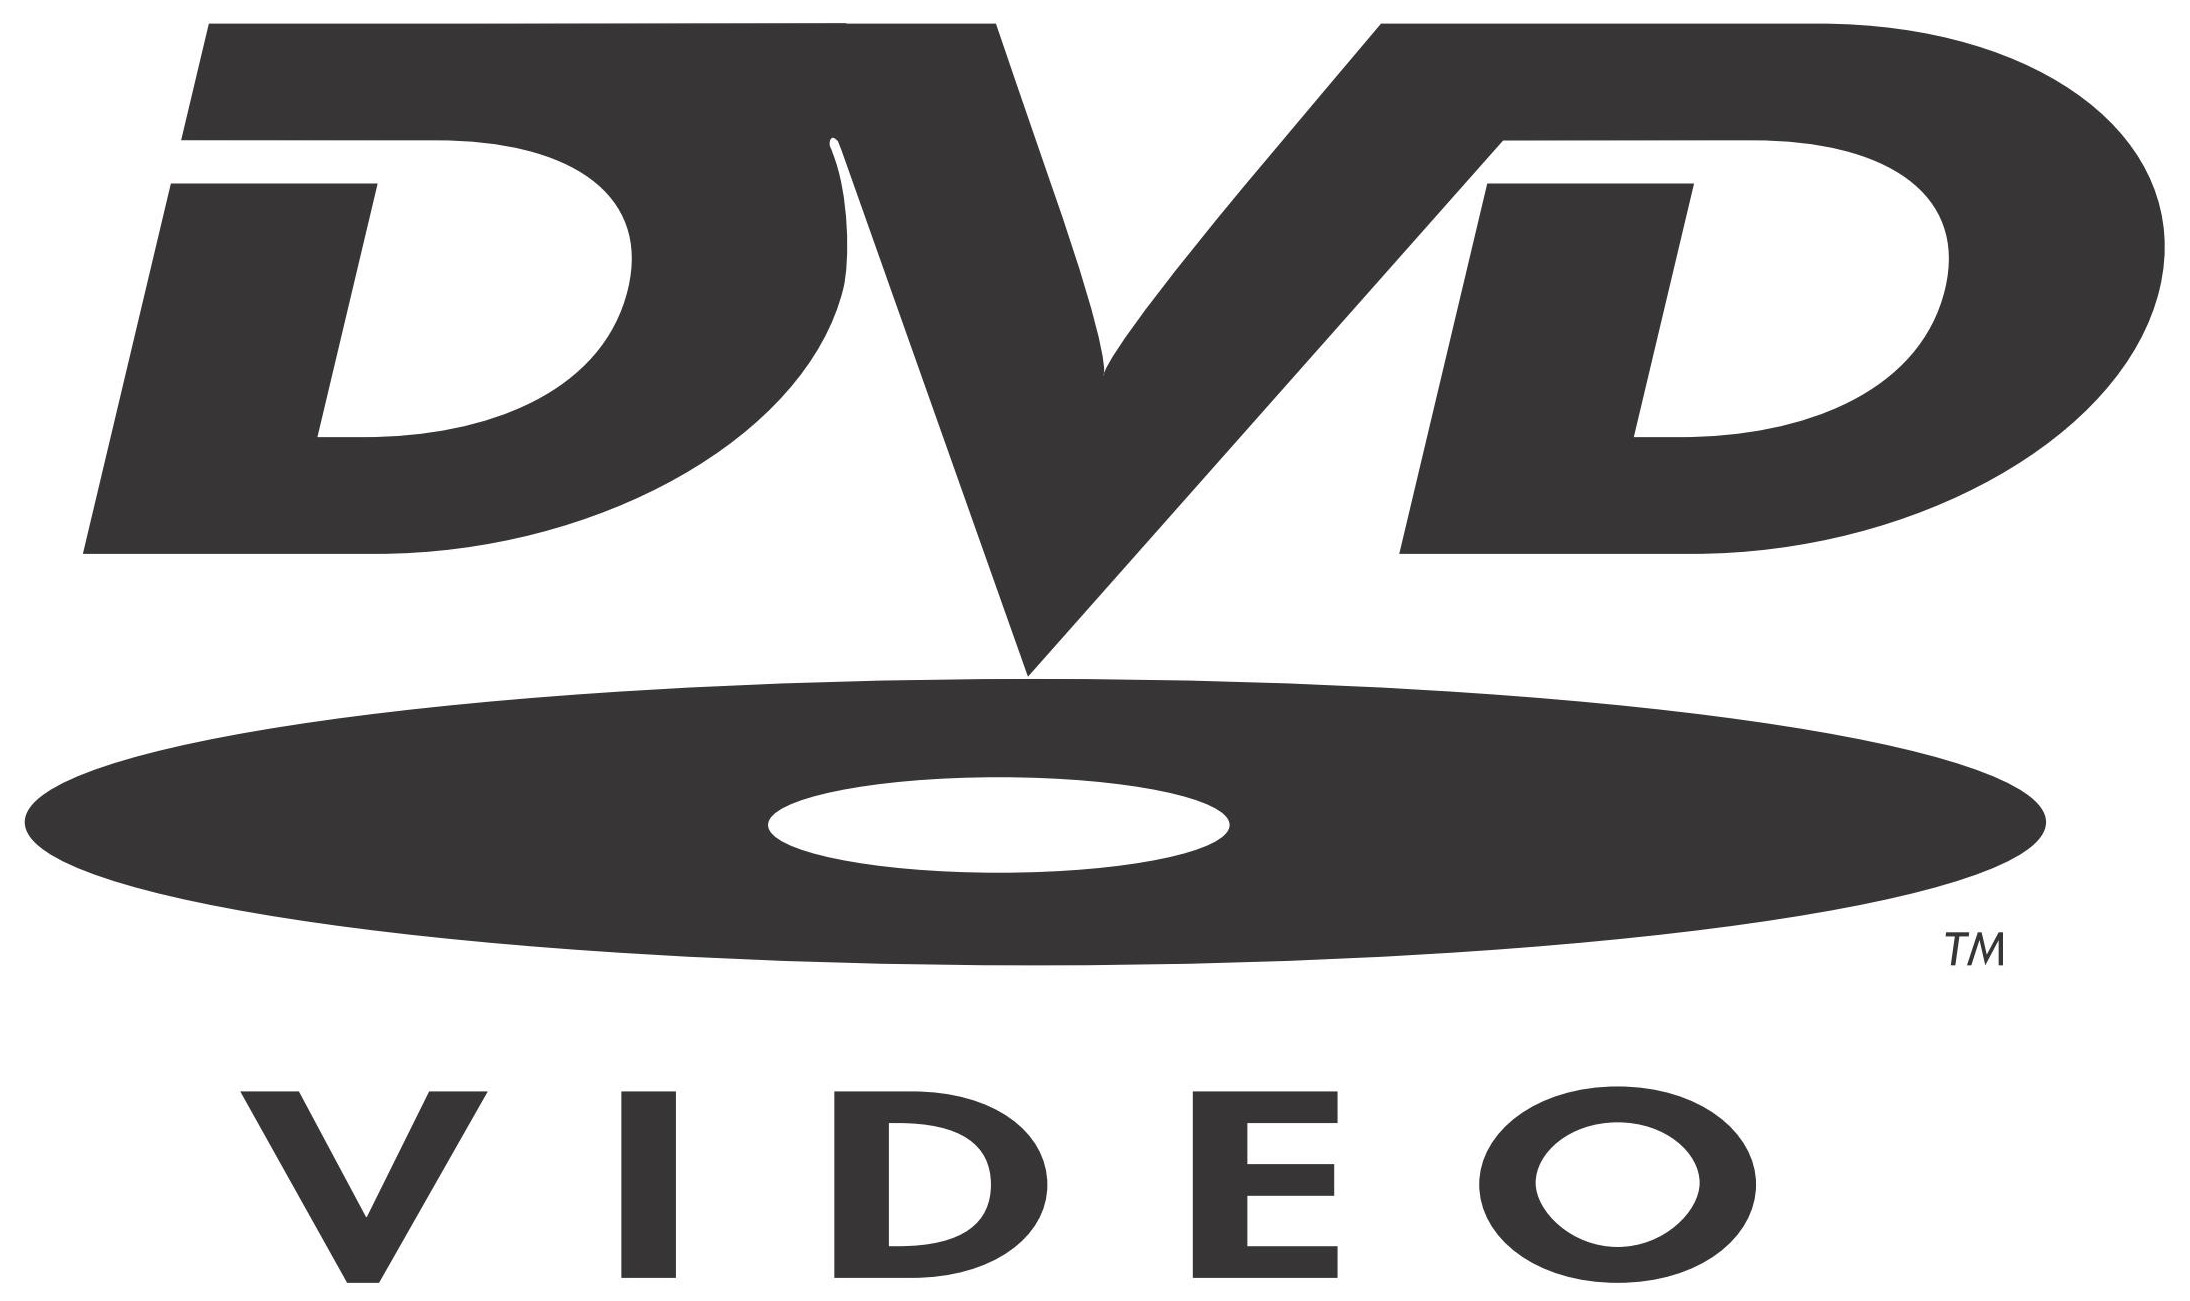 Dvd icon clipart